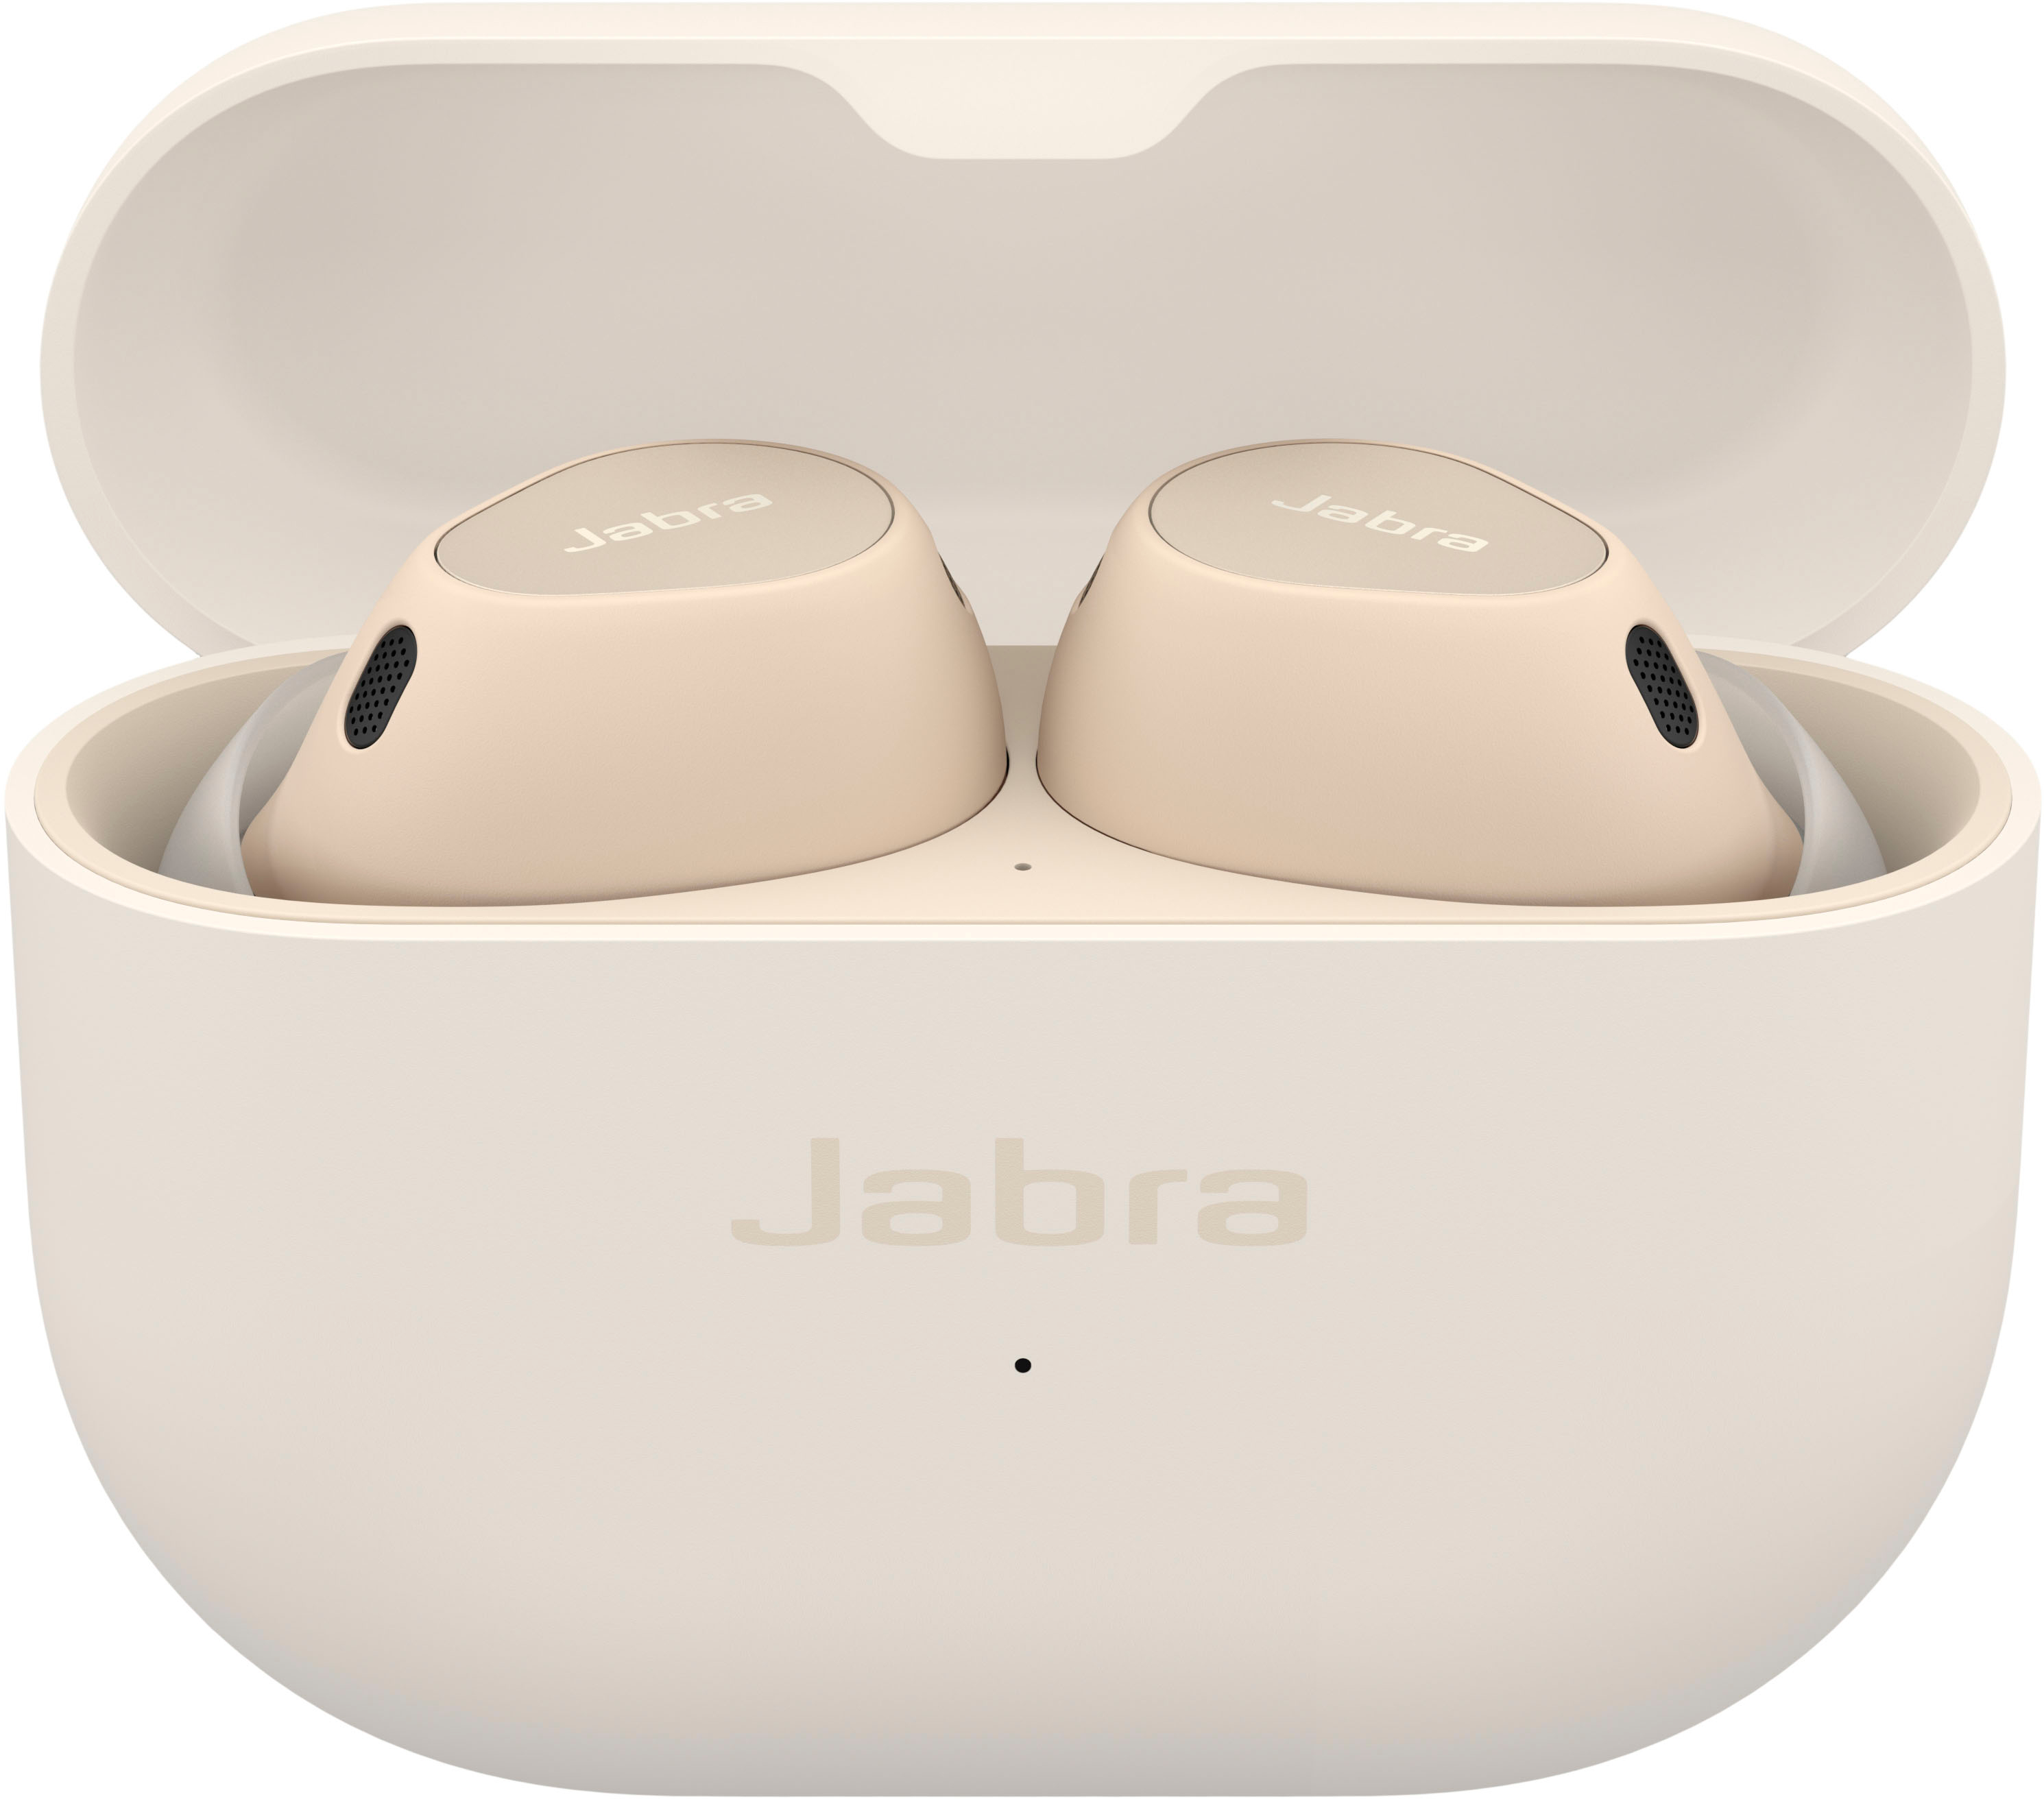 Jabra Elite Cream Best 10 True Buy Dolby 100-99280901-99 - In-ear Heaphones Wireless Atmos